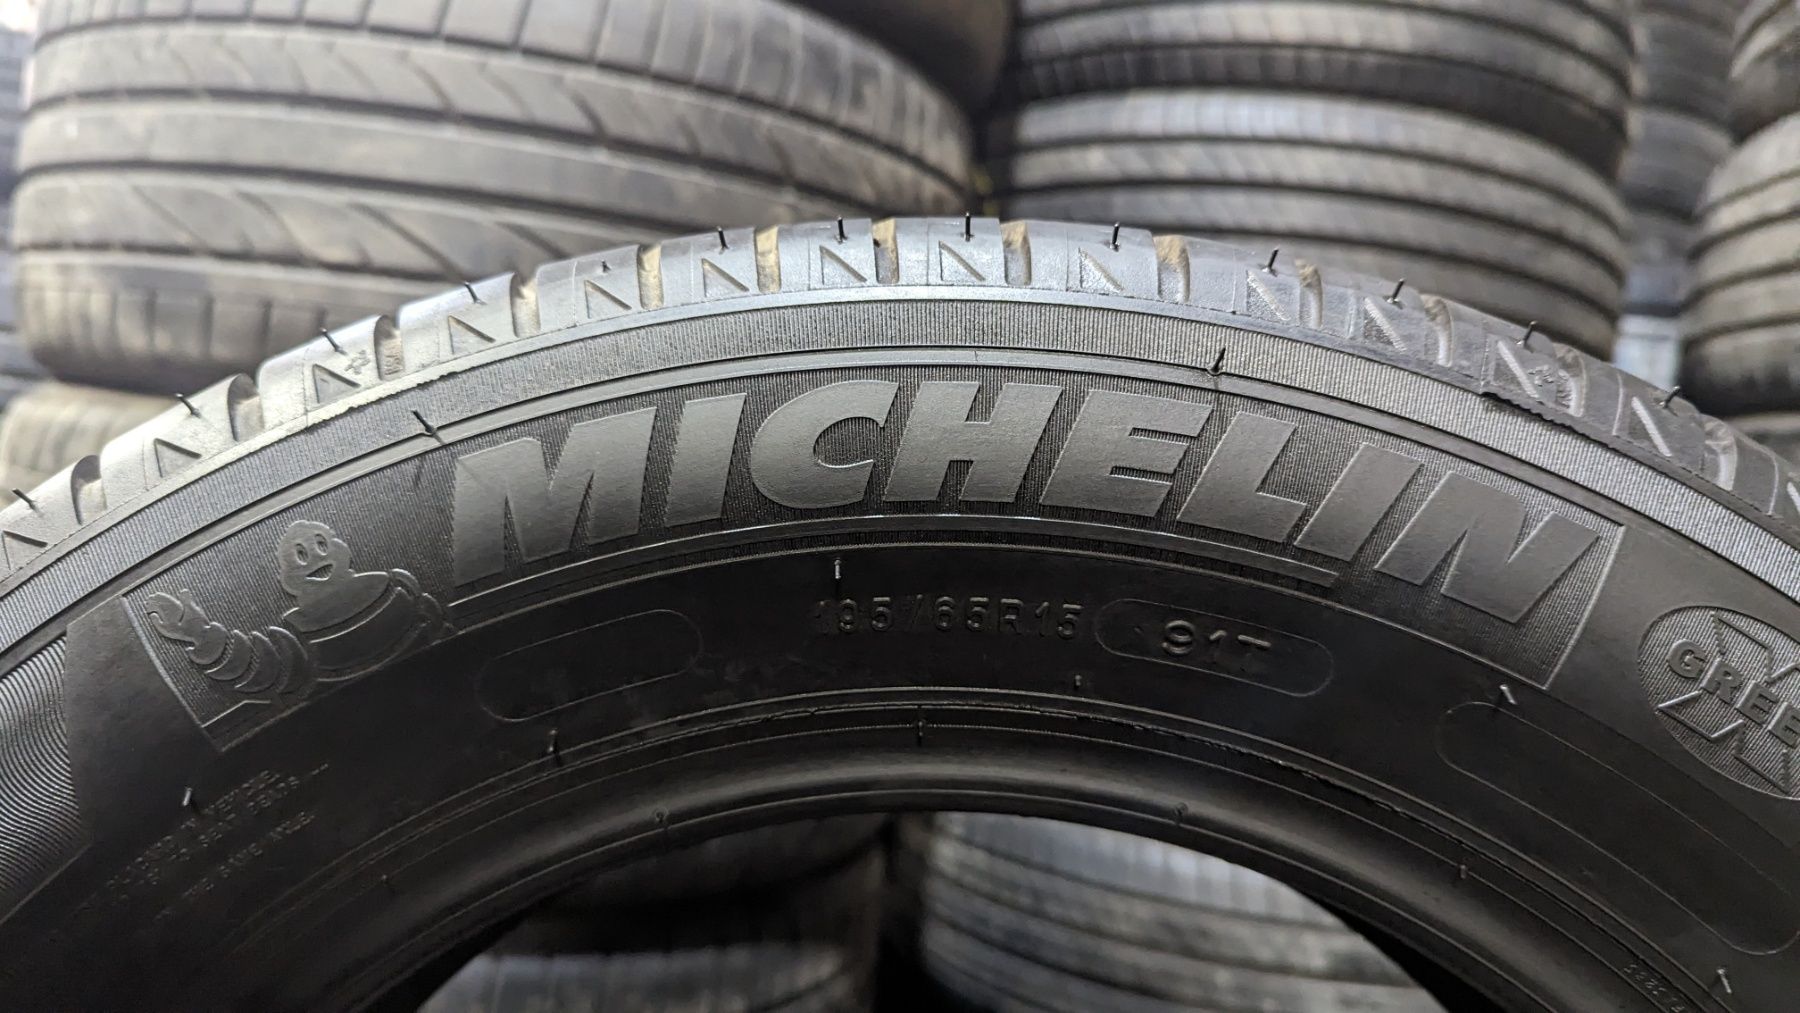 Шина 195/65 R 15 Michelin Energy Saver. Одне нове колесо. Розпаровка.